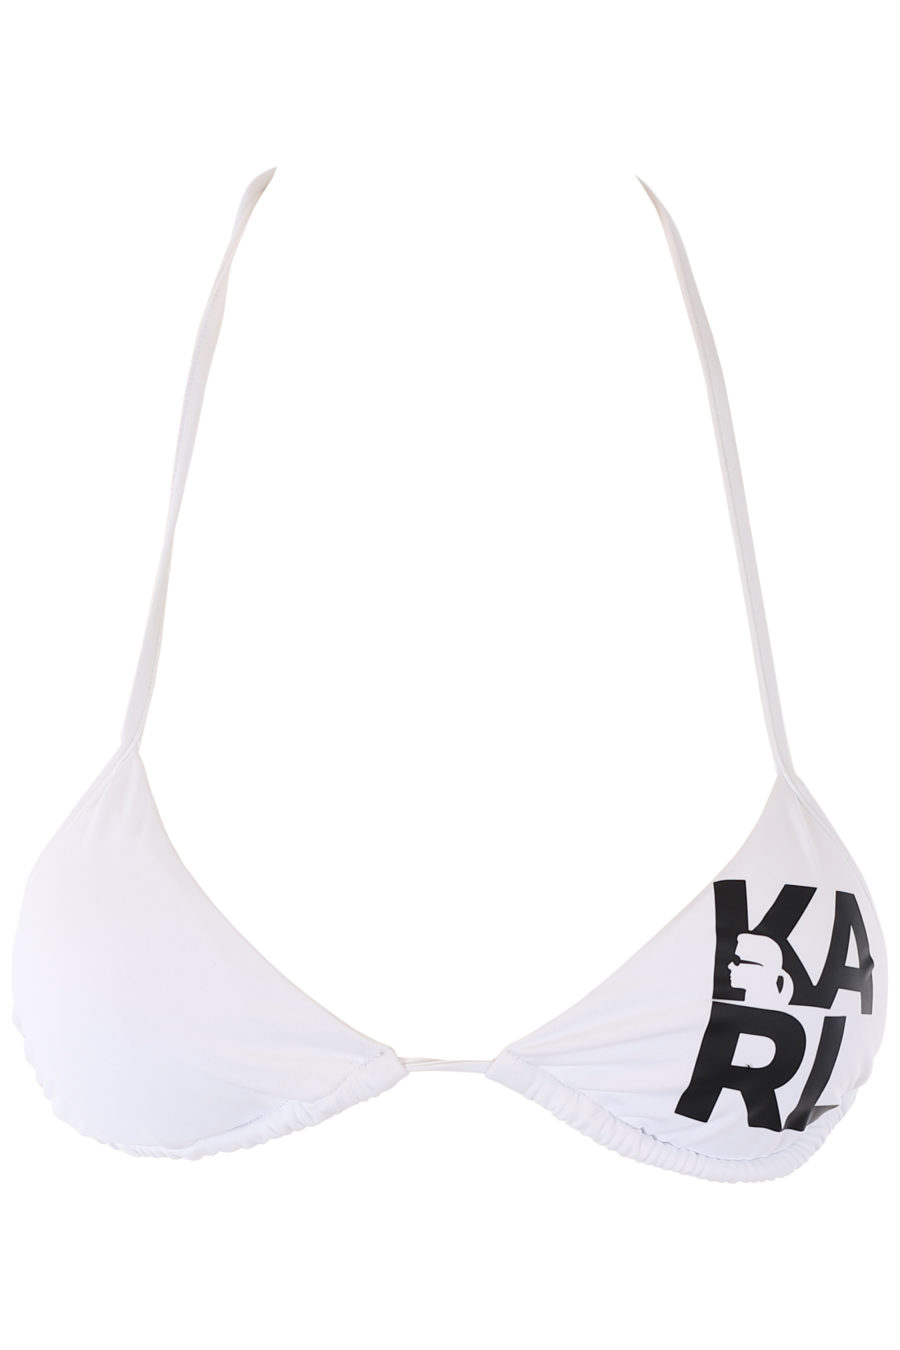 Top de bikini blanco con logo negro - IMG 1201